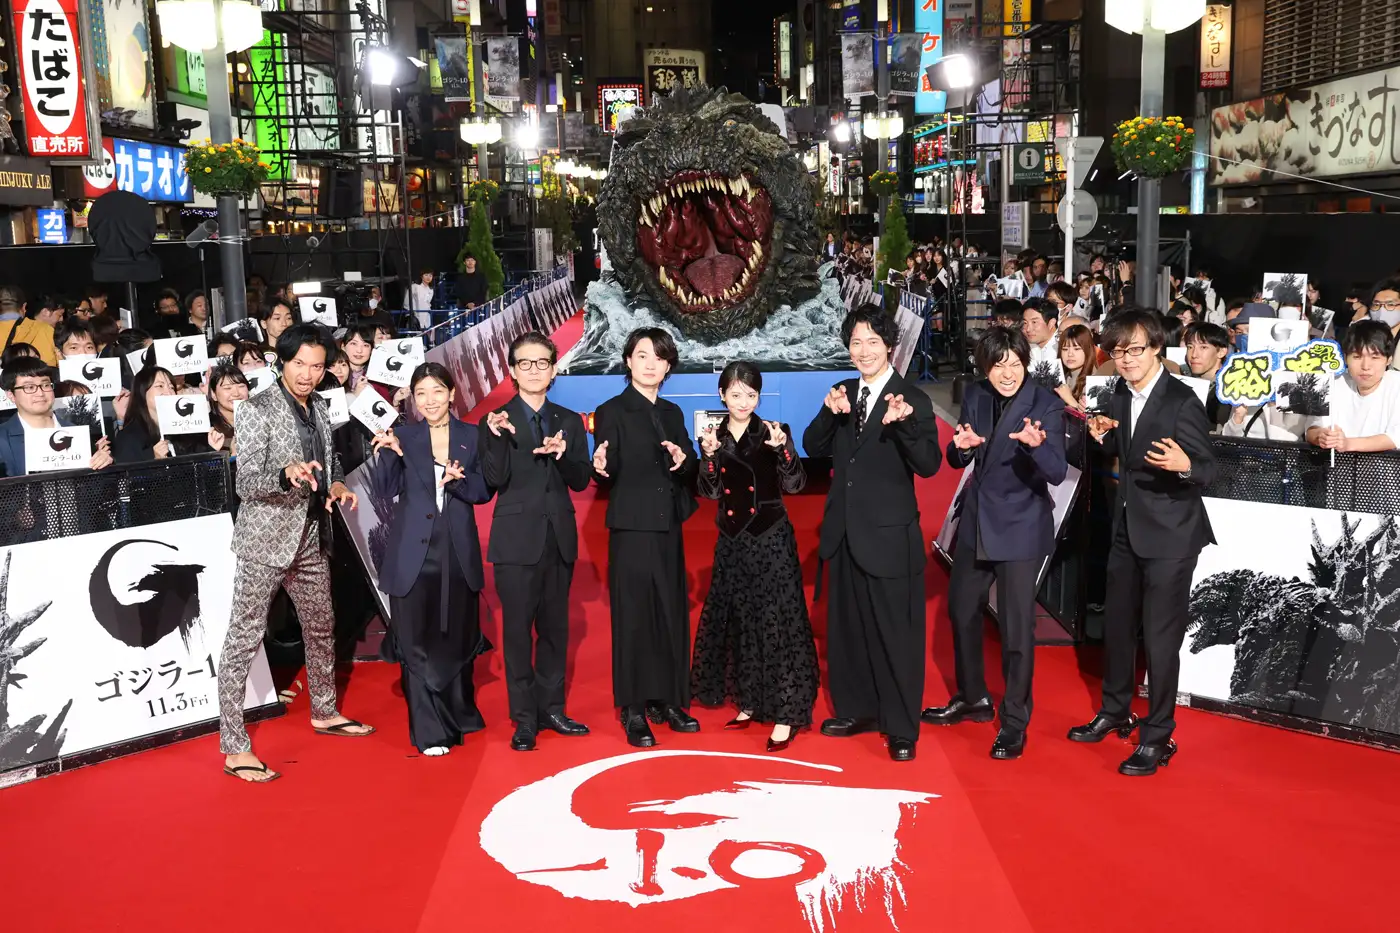 Attending the world premiere red carpet event for Godzilla Minus One from left: Takataka Aoki, Sakura Ando, Hidetaka Yoshioka, Ryunosuke Kamiki, Minami Hamabe, Kuranosuke Sasaki, Yuki Yamada, and director Takashi Yamazaki